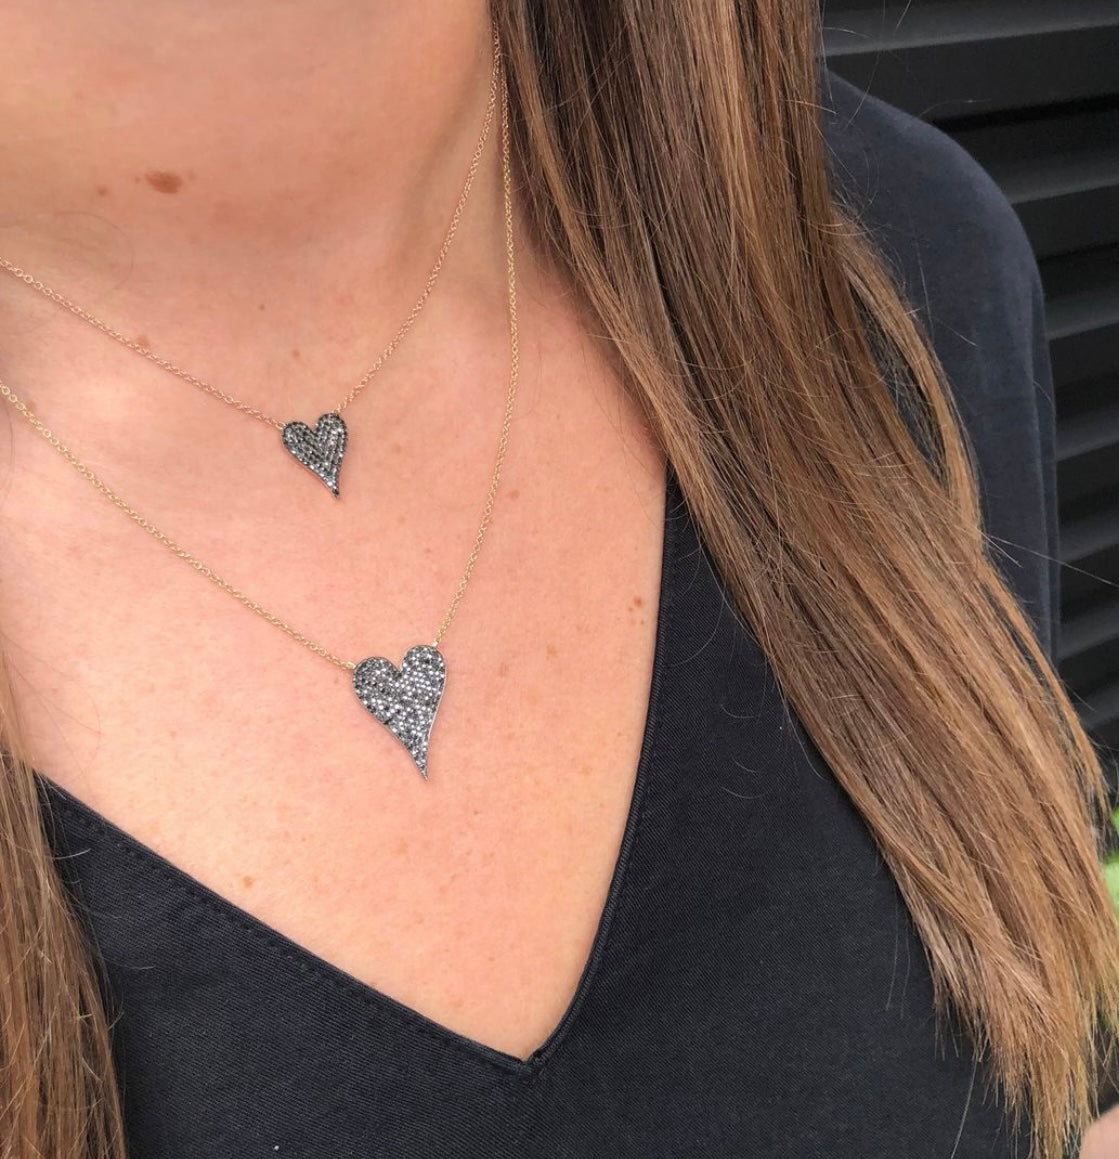 Black Diamond Medium Heart Necklace